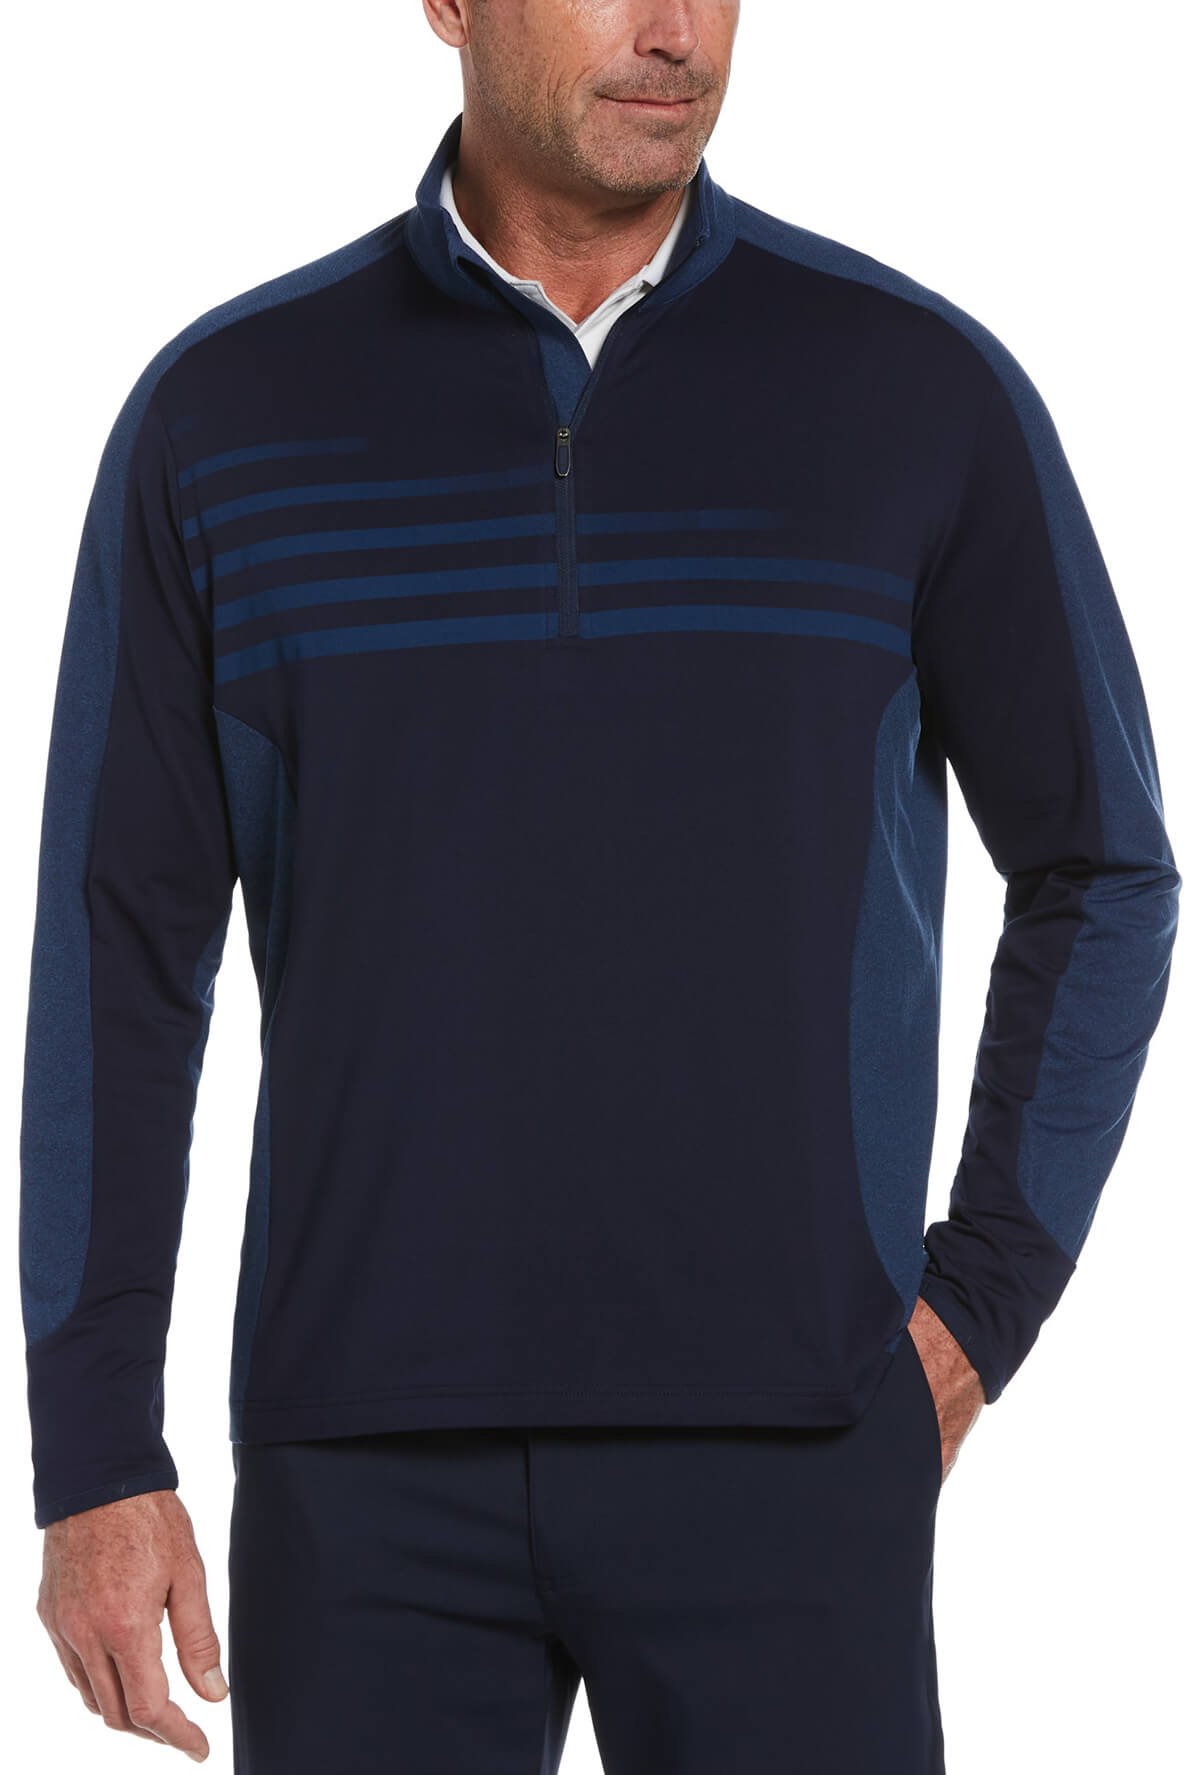 Save 50% on Callaway Men's Ultra Lightweight Aquapel 1/4 Zip Golf Pullover, Polyester/elastane In Peacoat, Size S